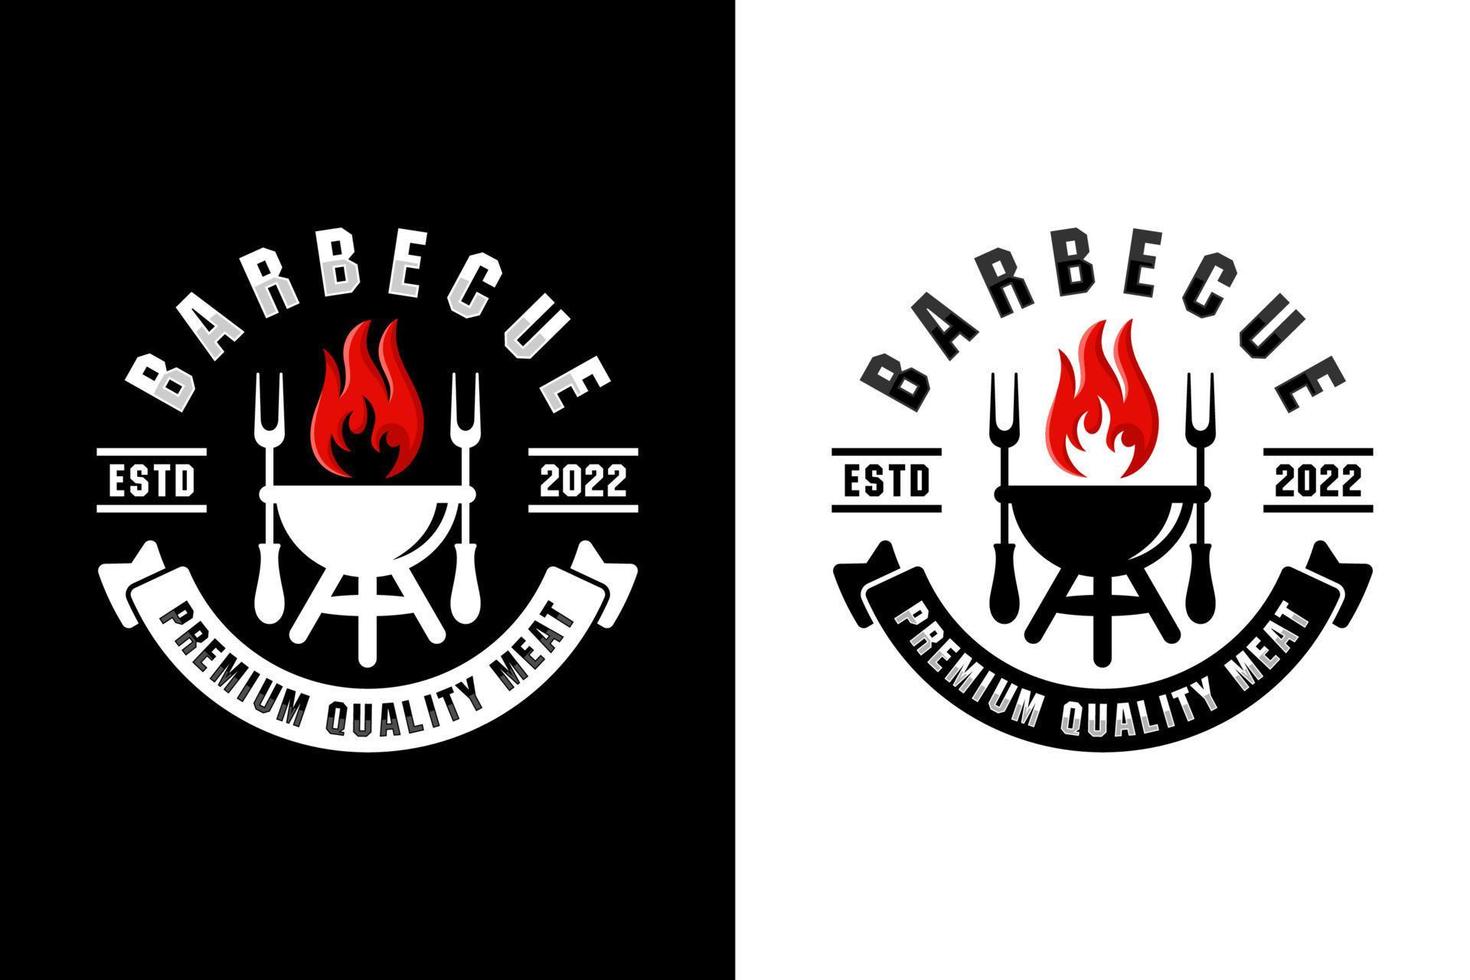 barbecue grill collection de logos de conception de viande de qualité supérieure vecteur